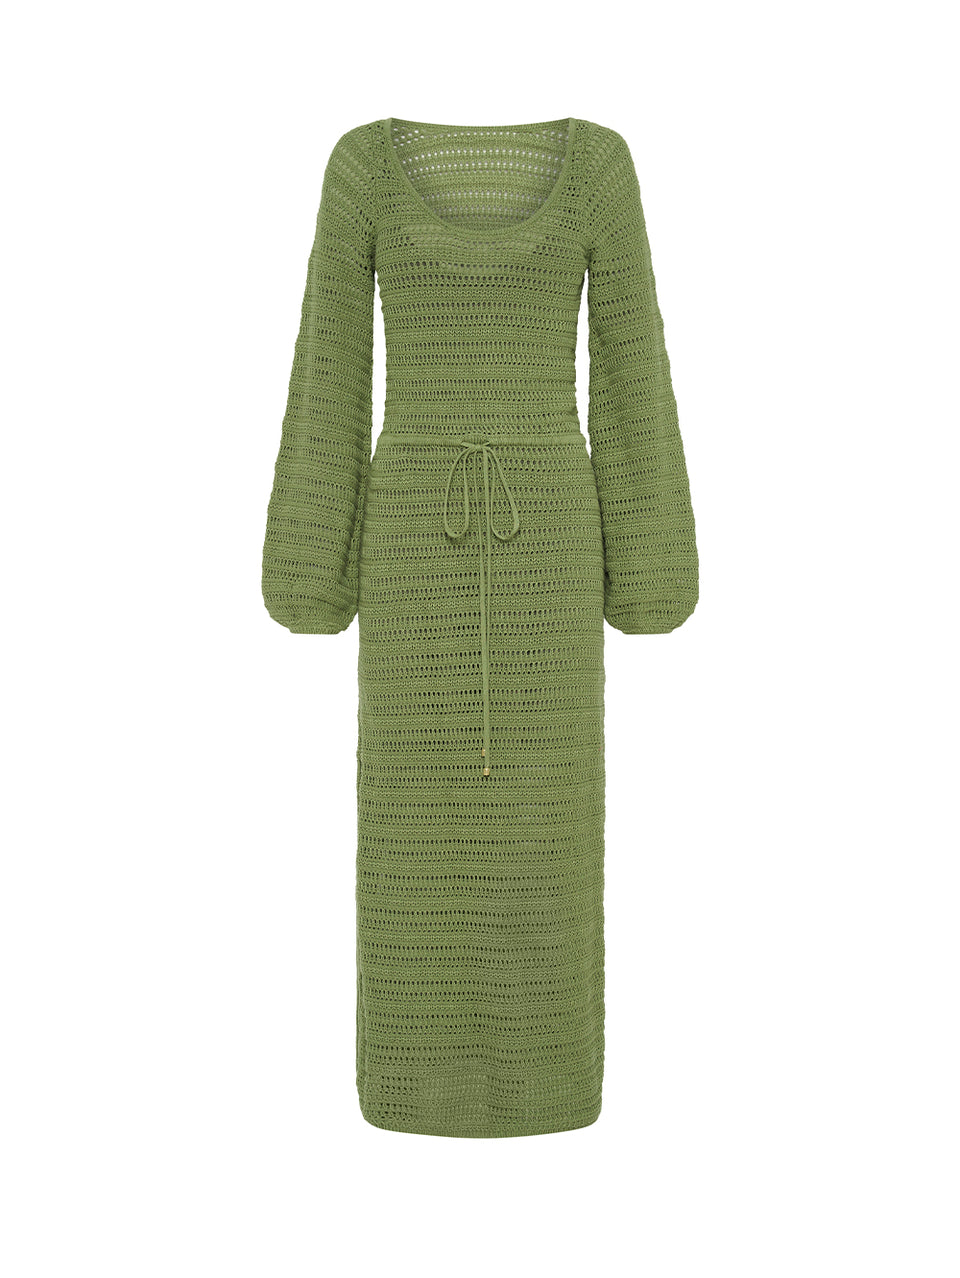 Pepe Knit Dress Avocado KIVARI | Avocado green knit maxi dress